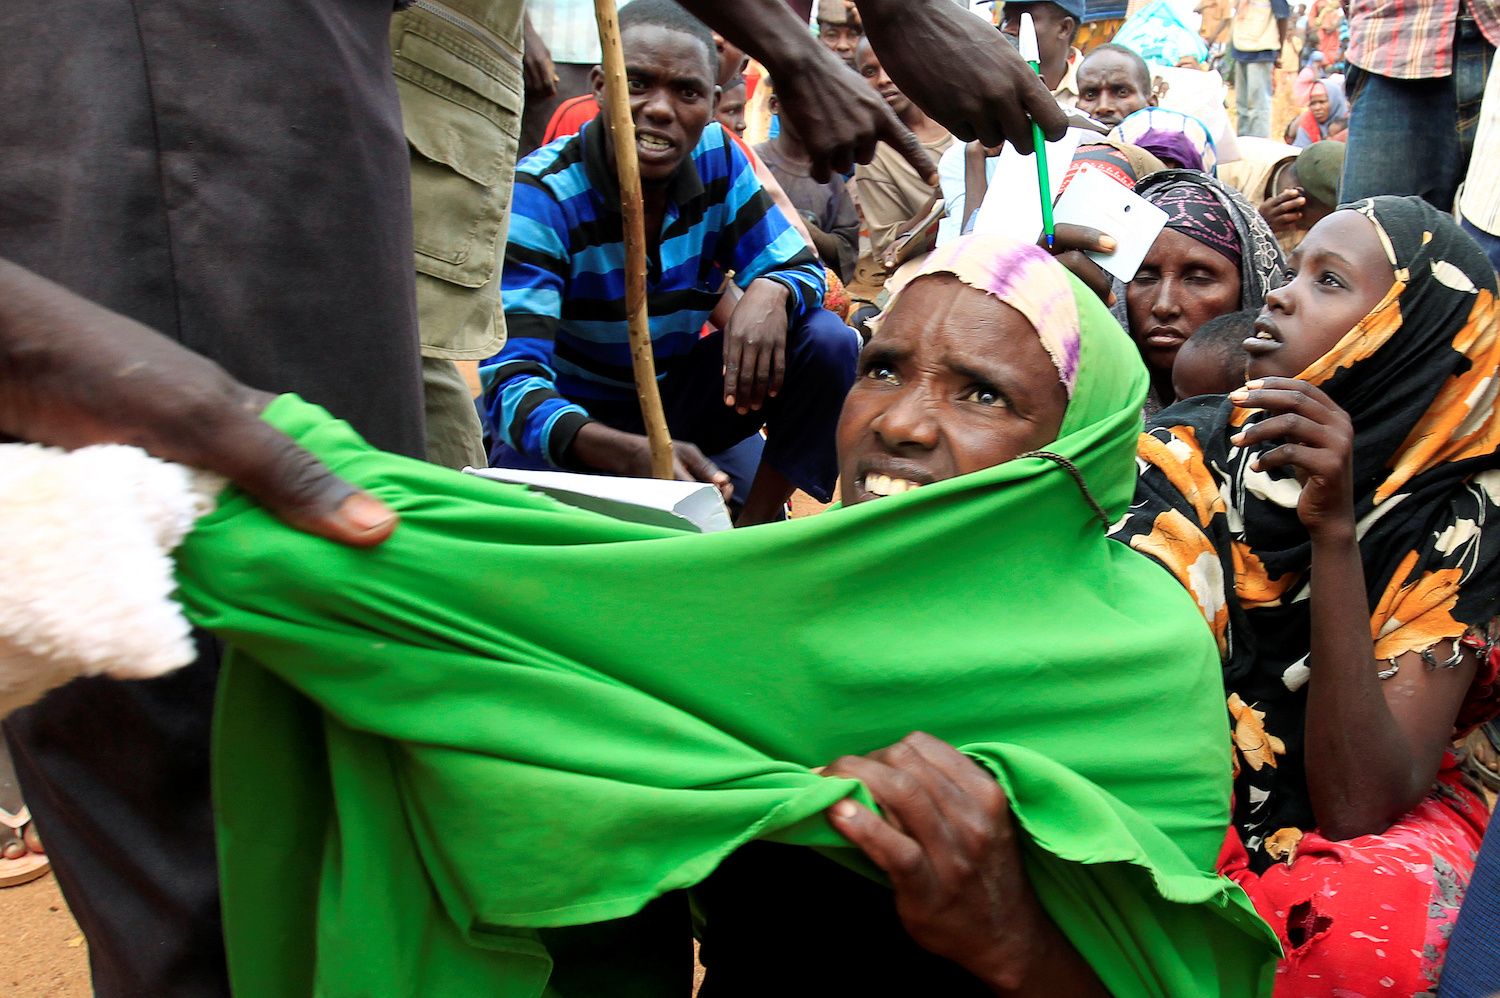 Acusan a Kenia de expulsar a los refugiados somalíes de forma "poco digna"